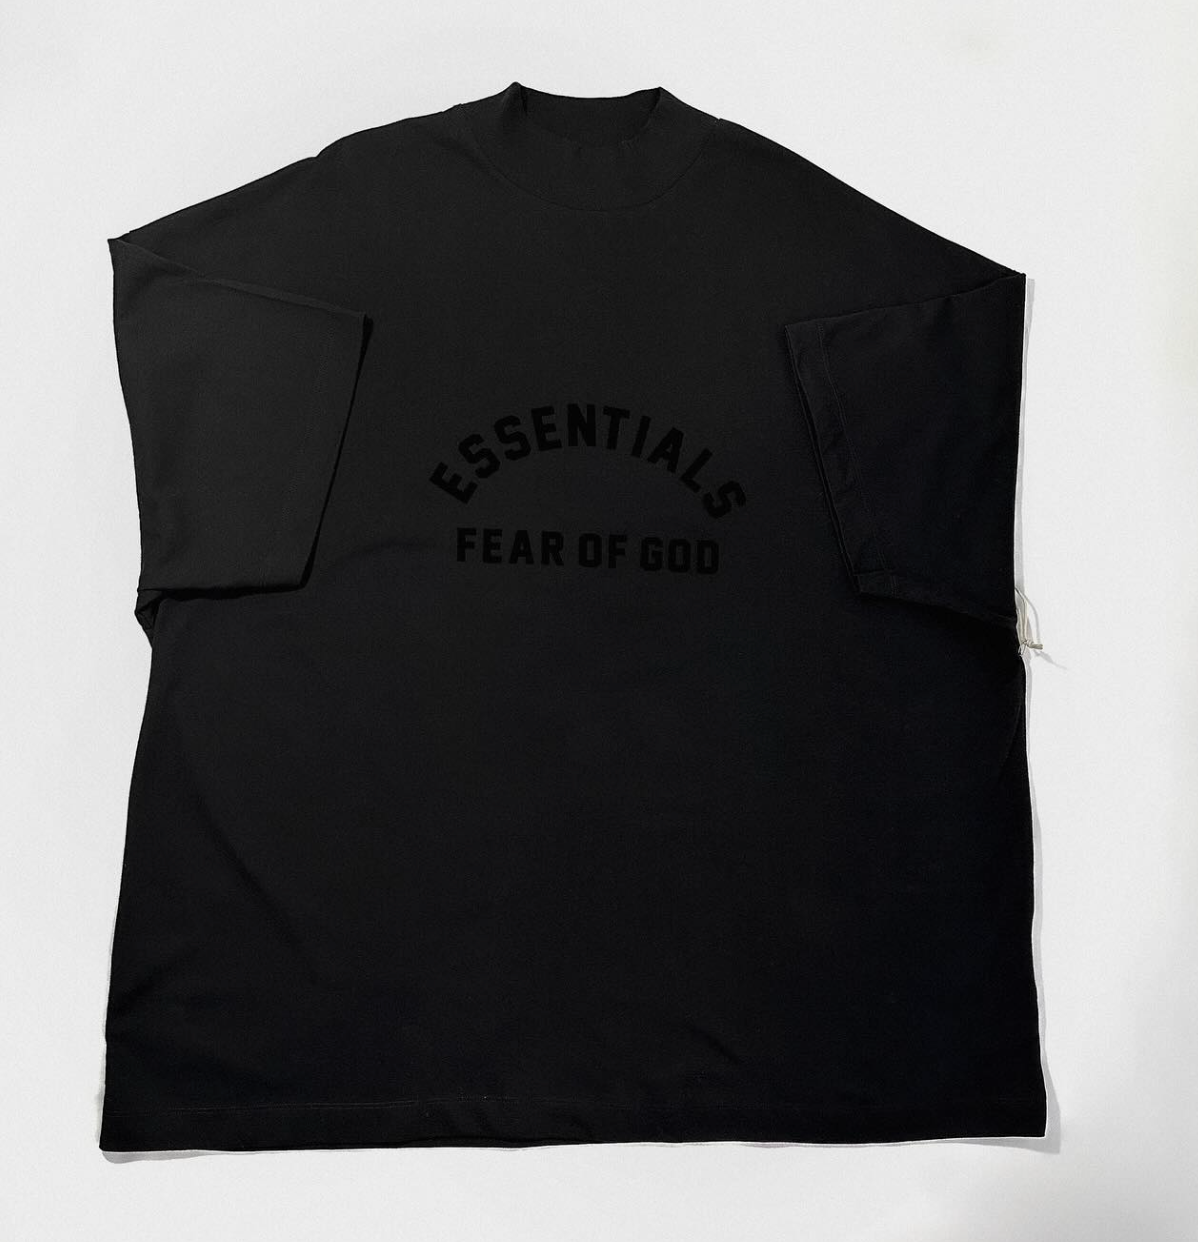 Essentials Fear Of God T-Shirt